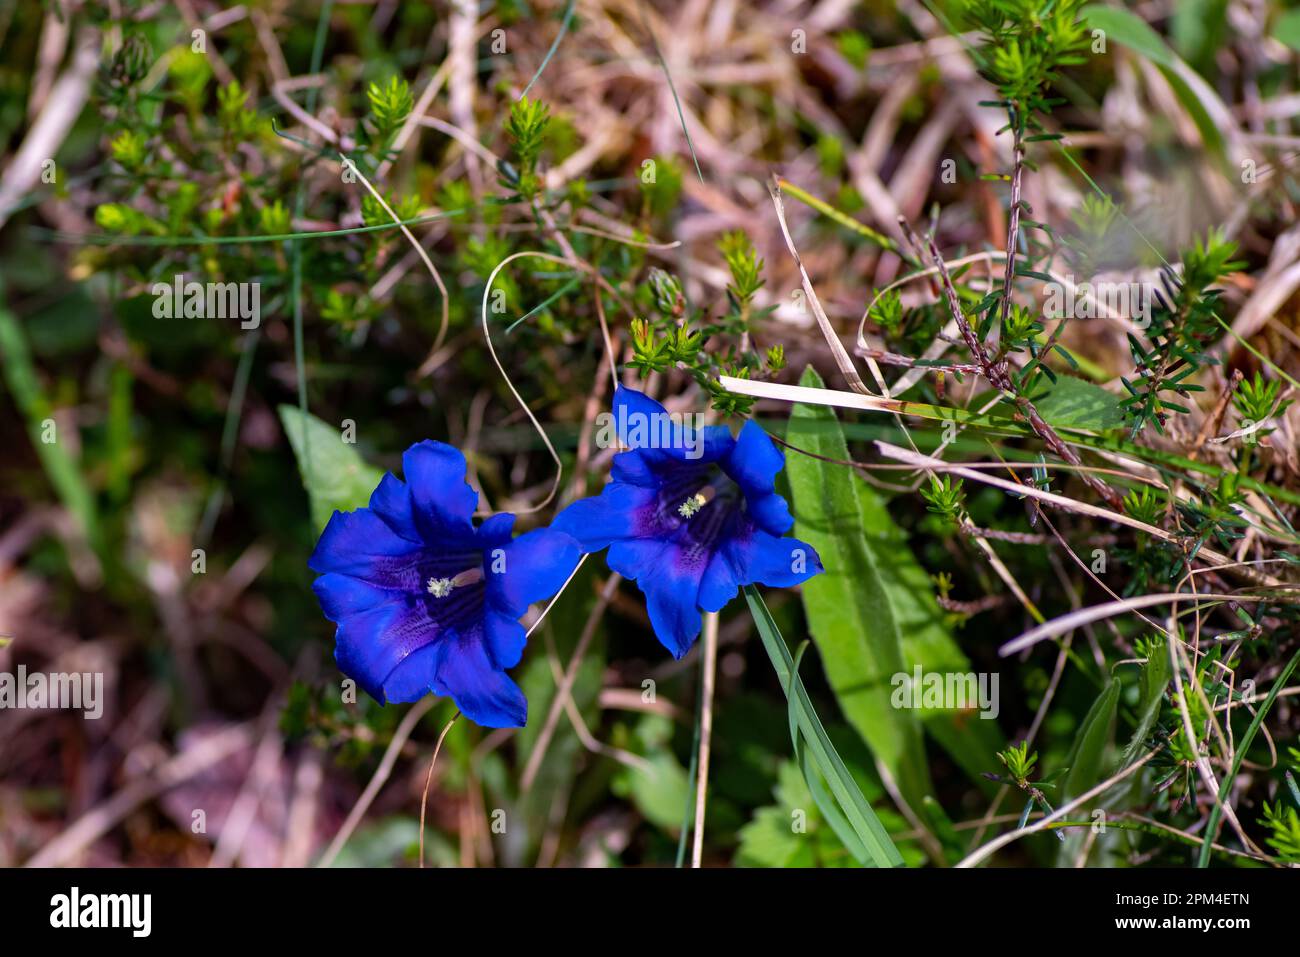 Wild, deep blue flowering gentian, Gentiana, on the forest floor Stock Photo